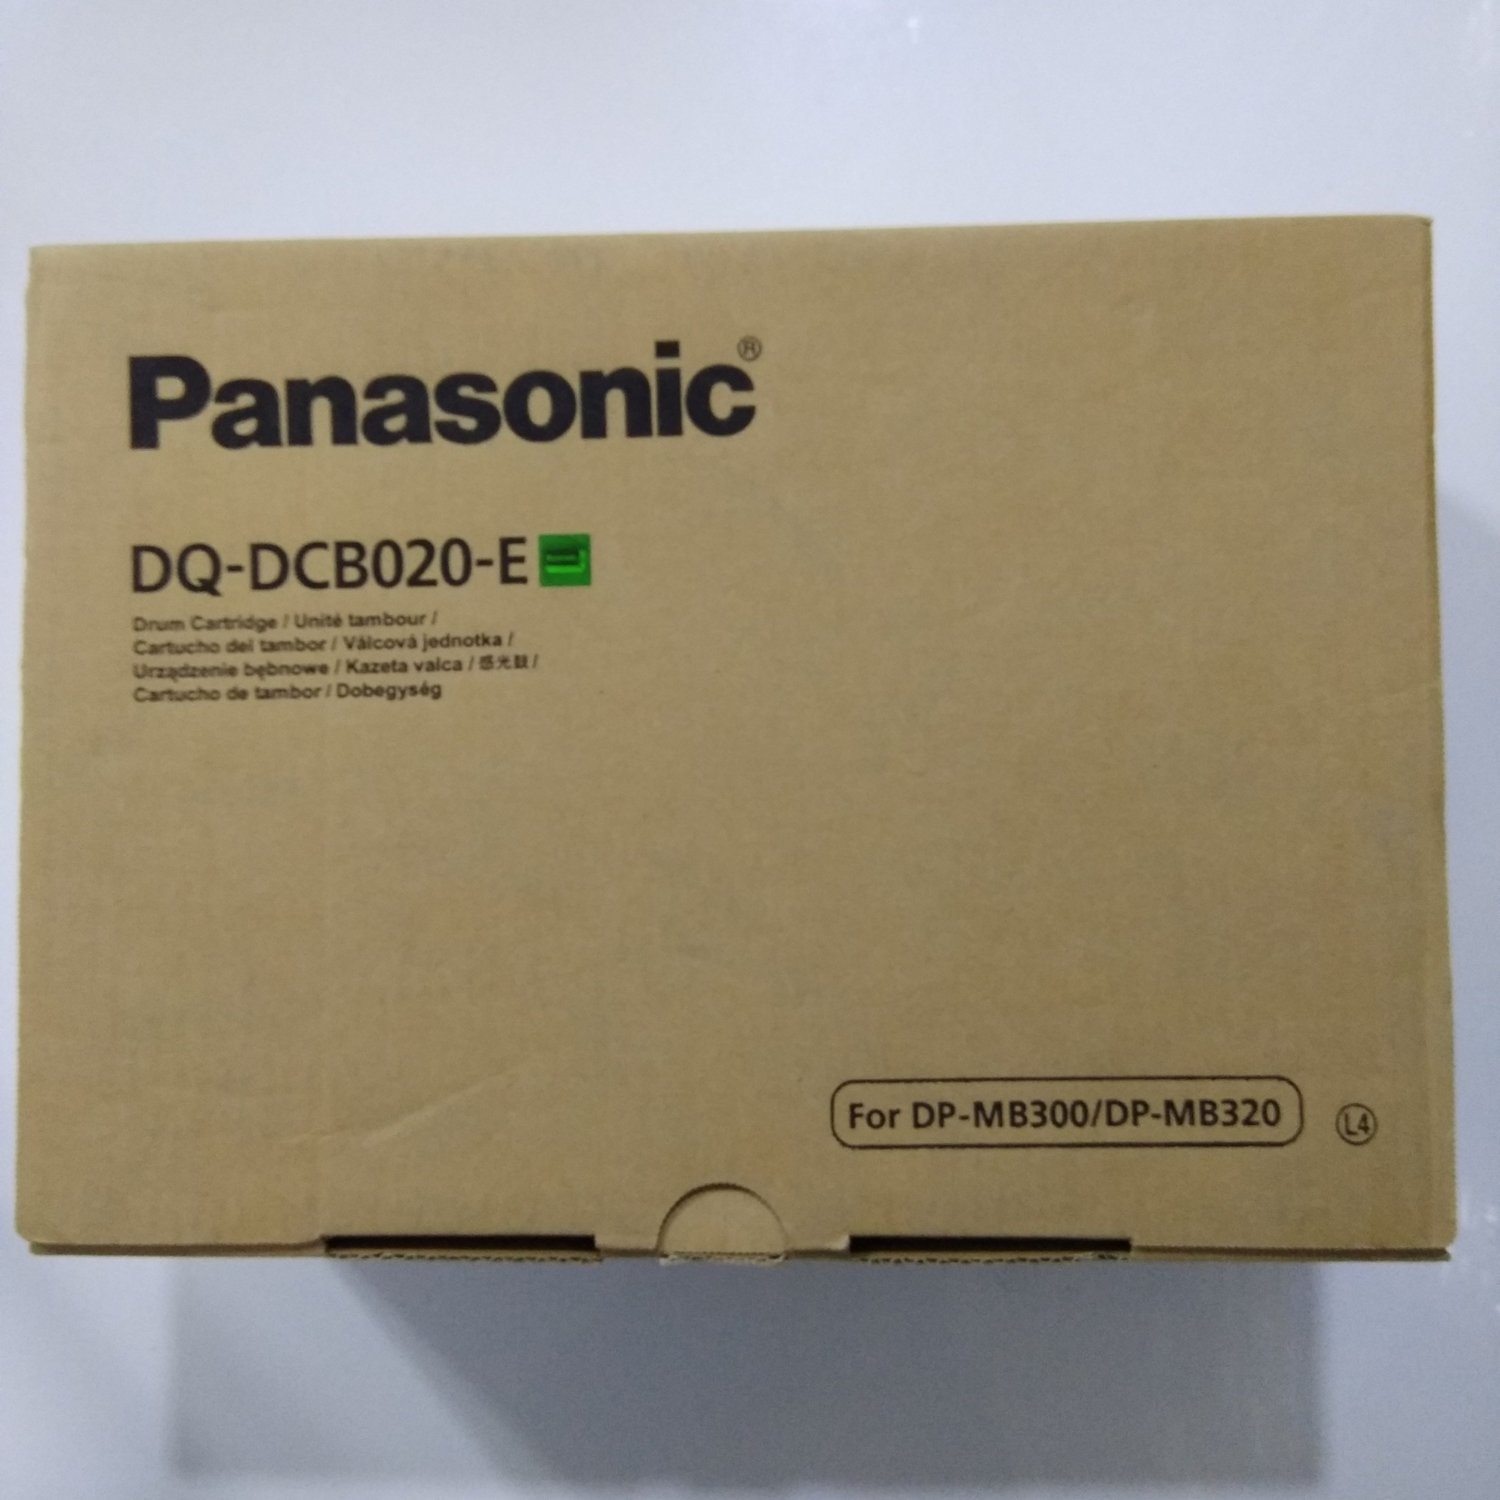 Panasonic DQ DCB020-E Drum Unit